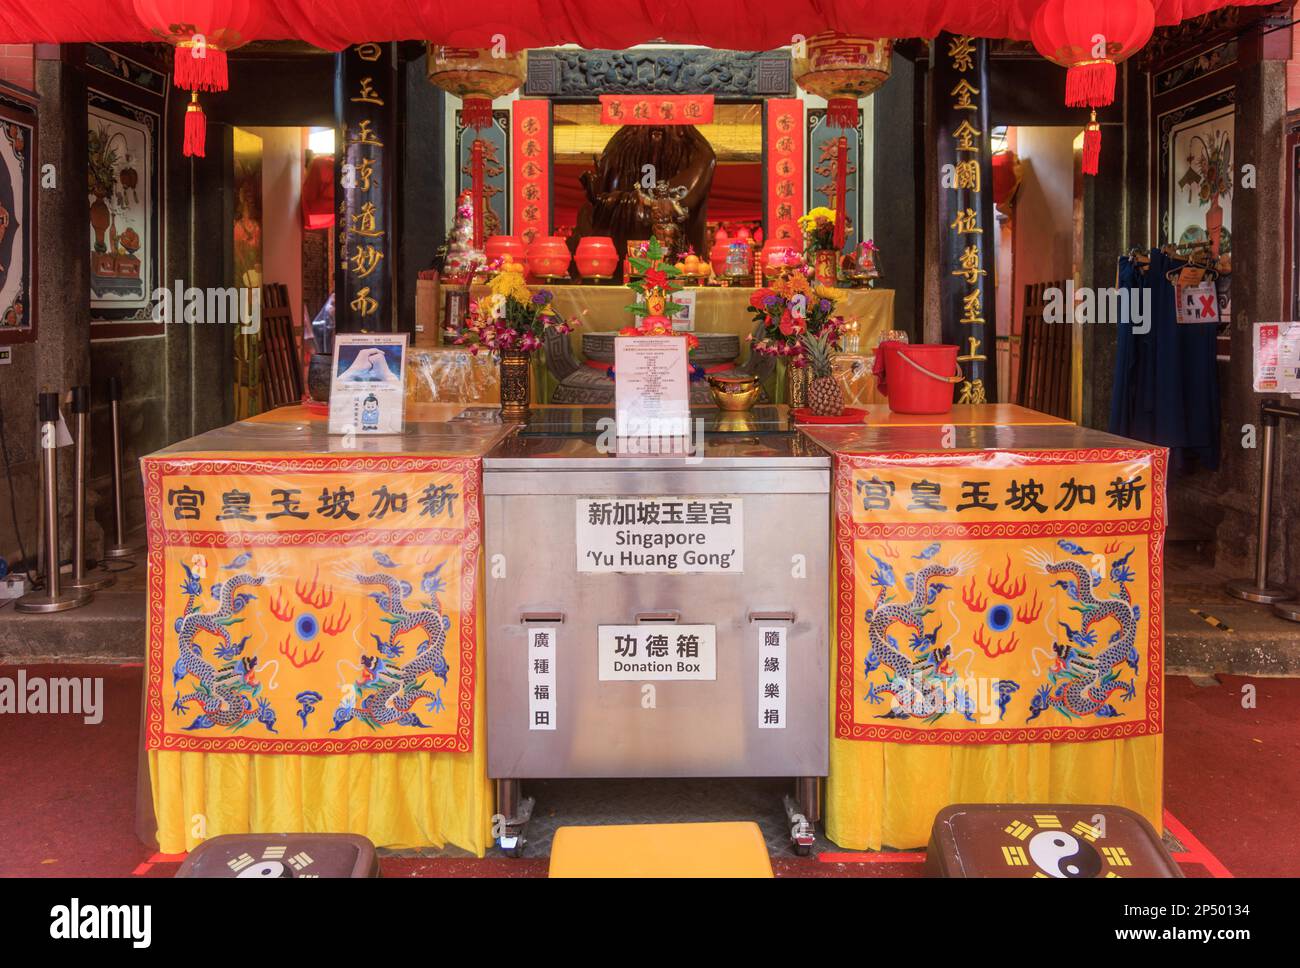 Yu Huang Gong or Temple of Heavenly Jade Emperor, Telok Ayer Street, Singapore Stock Photo